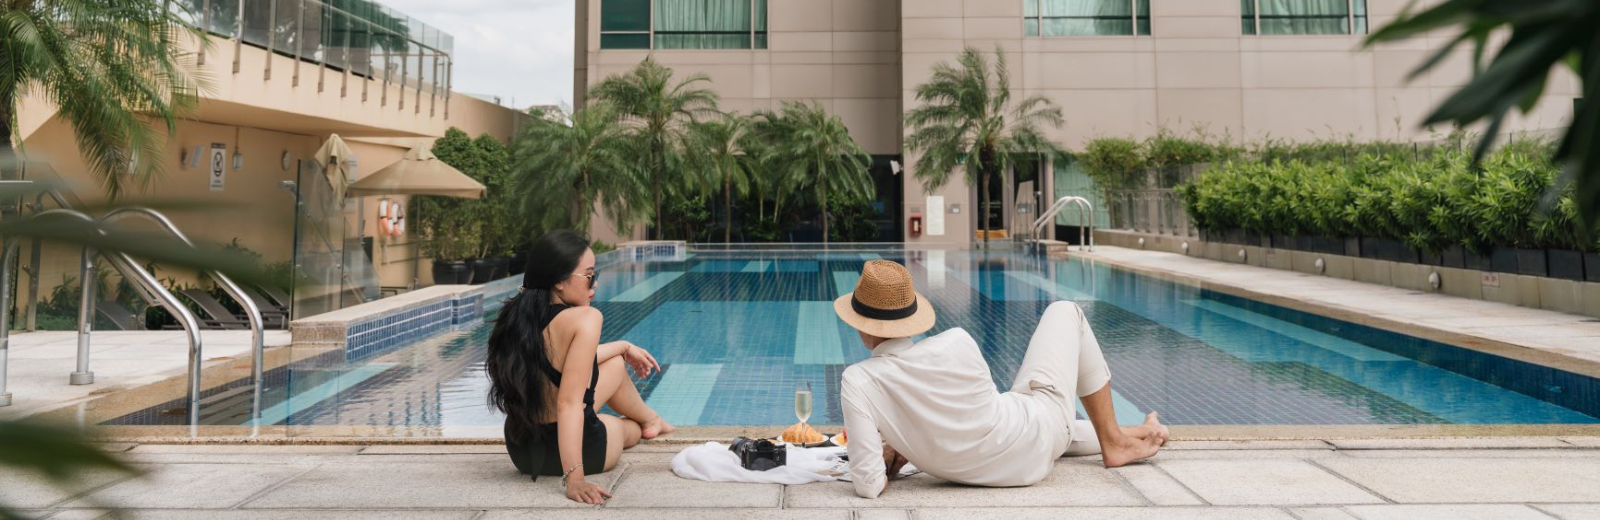 InterContinental Saigon - Hotel Pool